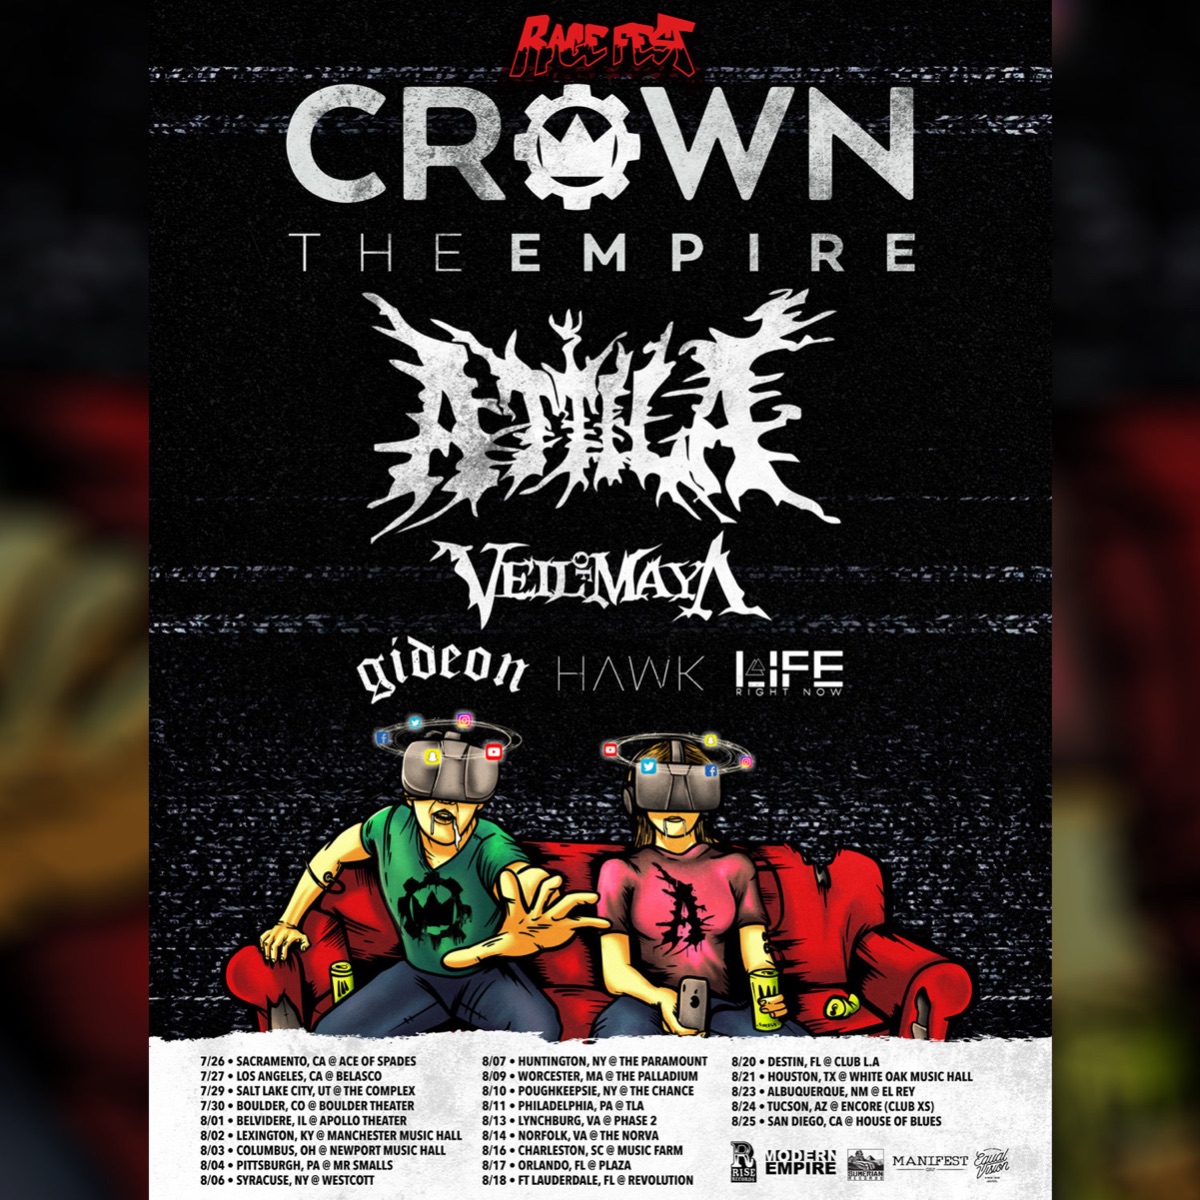 Crown the Empire Drop "Sudden Sky" Video + Announce Summer Tour Plans